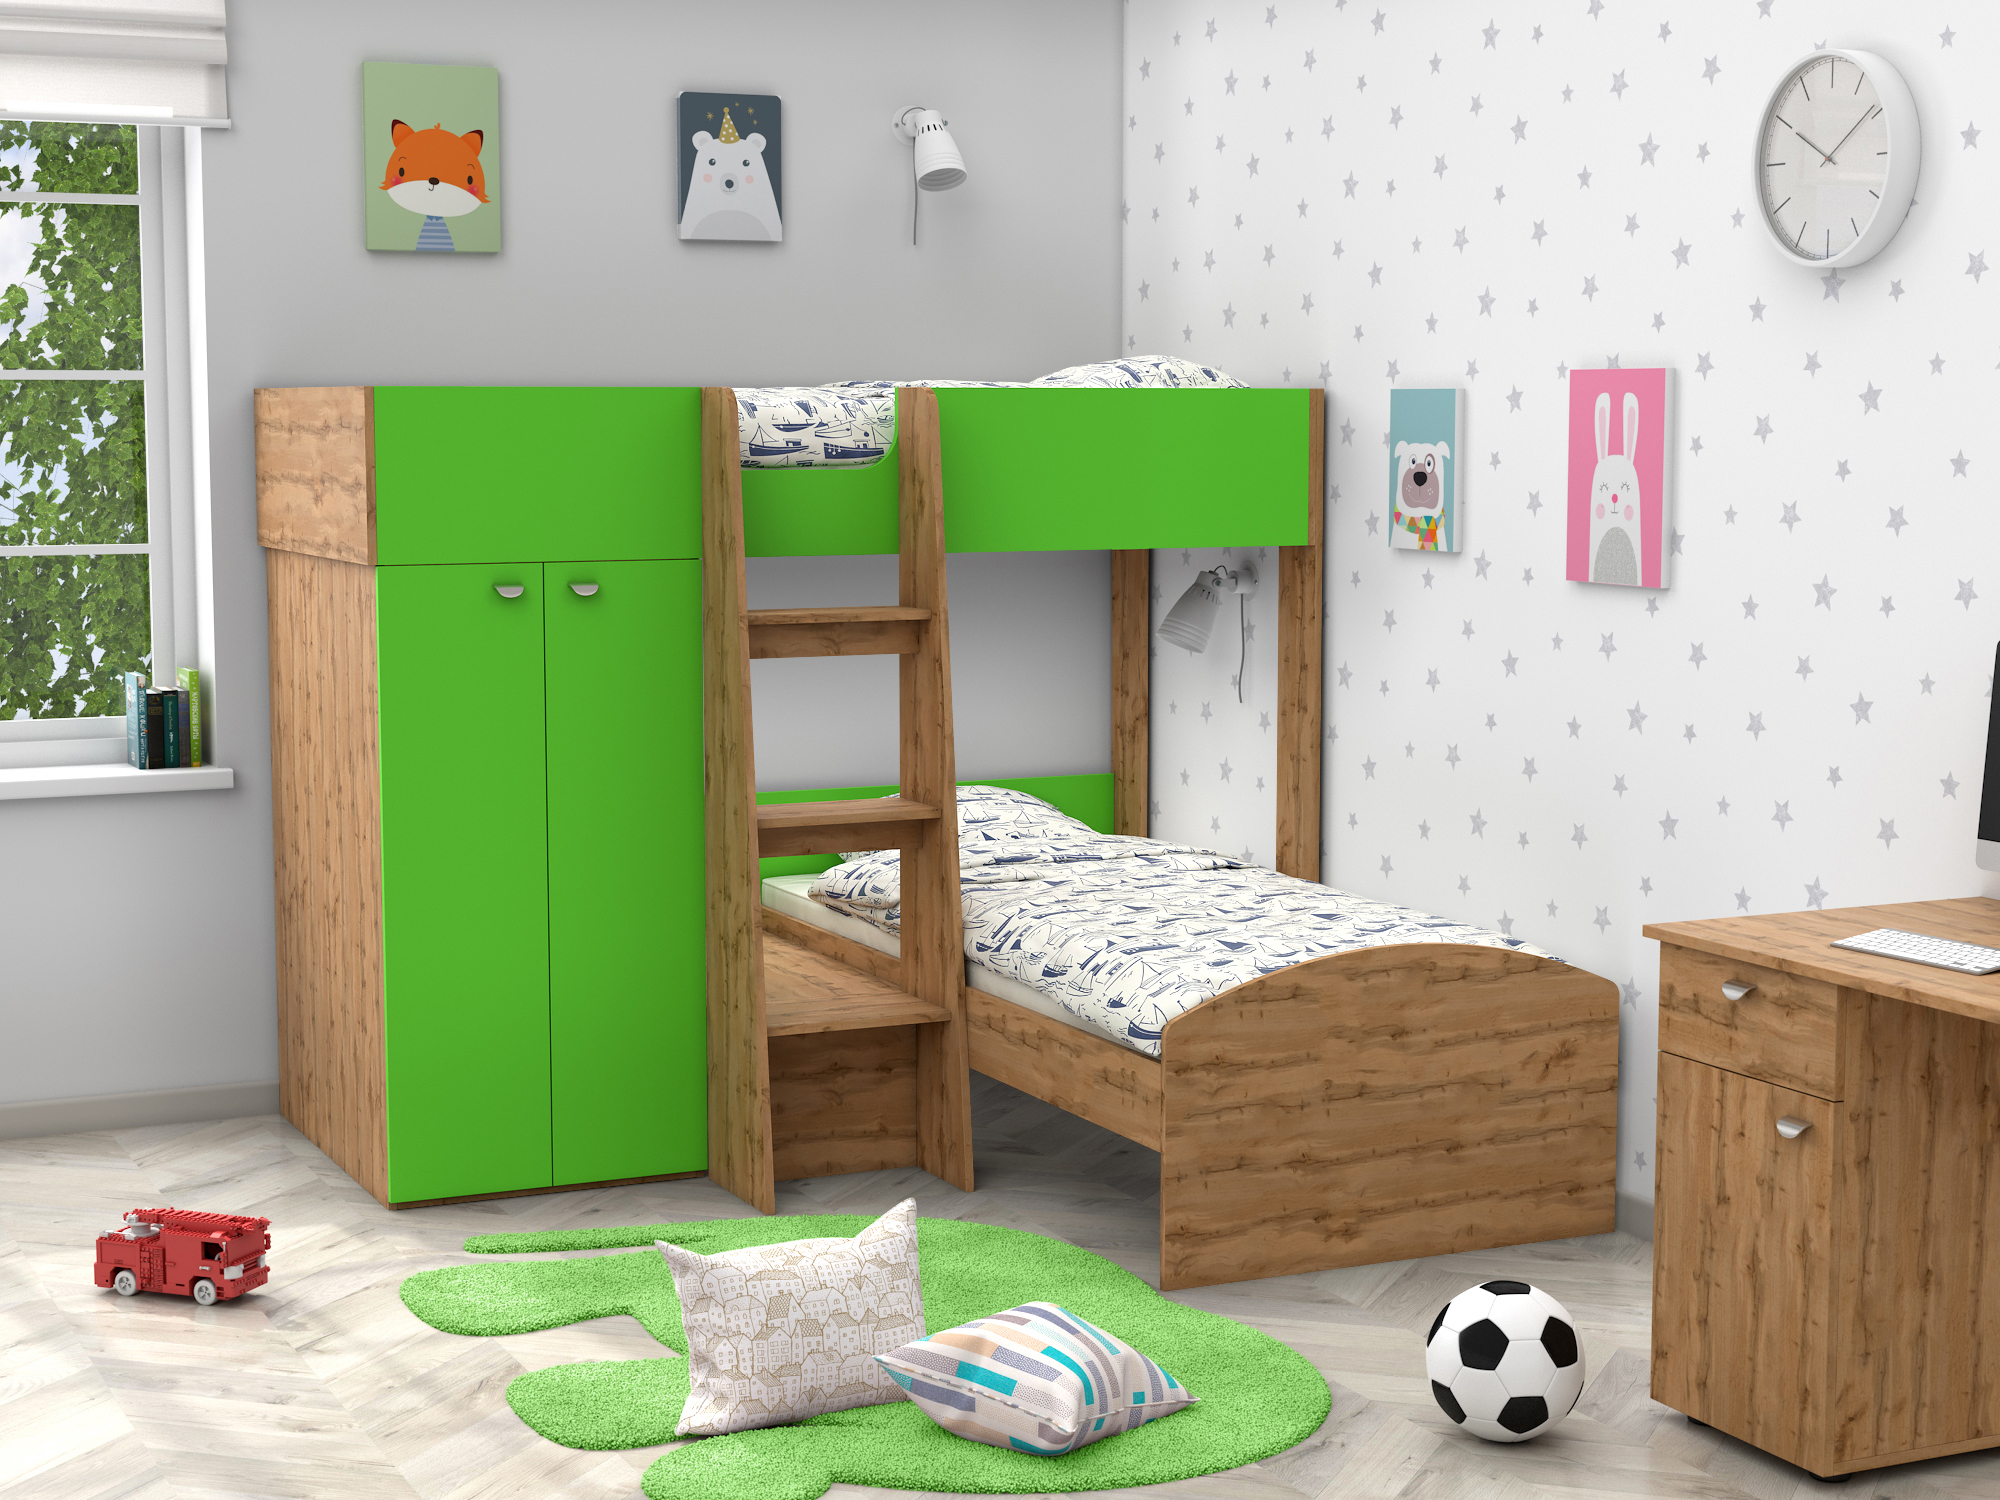 Двухъярусная кровать Golden Kids-4 (90х200) Зеленый, Бежевый, ЛДСП двухъярусная кровать golden kids 4 90х200 голубой бежевый лдсп